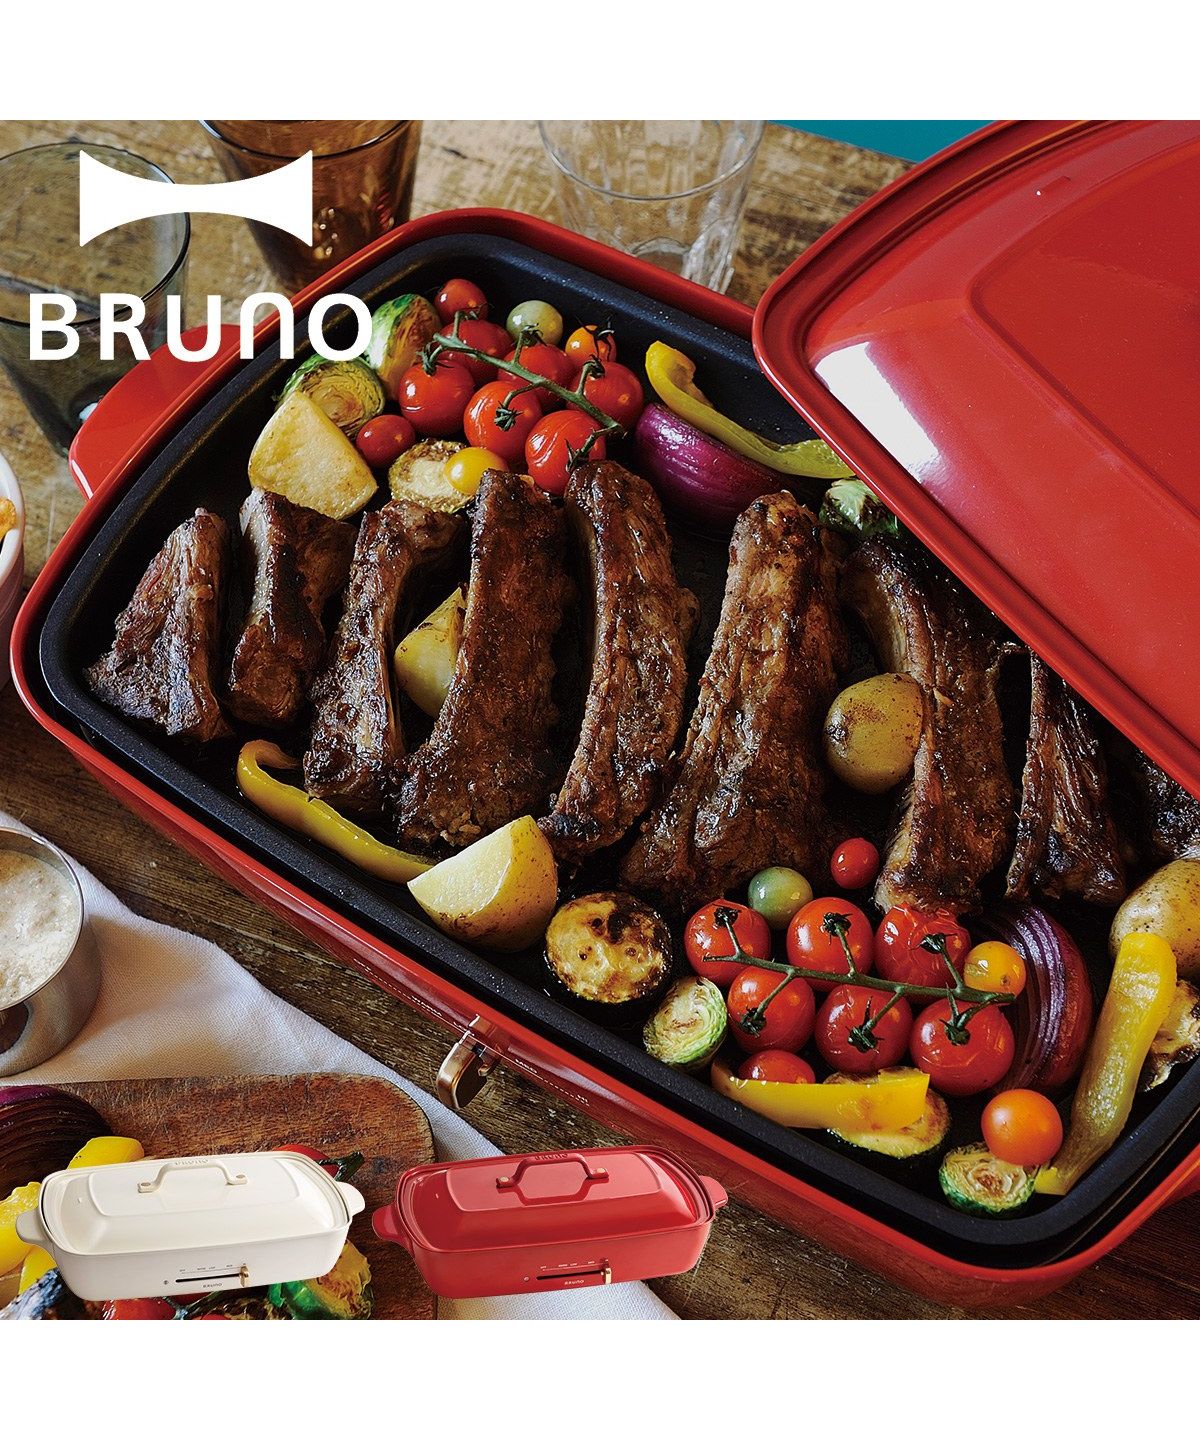 BRUNO ブルーノ ホットプレート たこ焼き器 焼肉 グランデサイズ 大きめ 平面 電気式 ヒーター式 1200W 大型 大きい パーティ キッチン  ホワイト